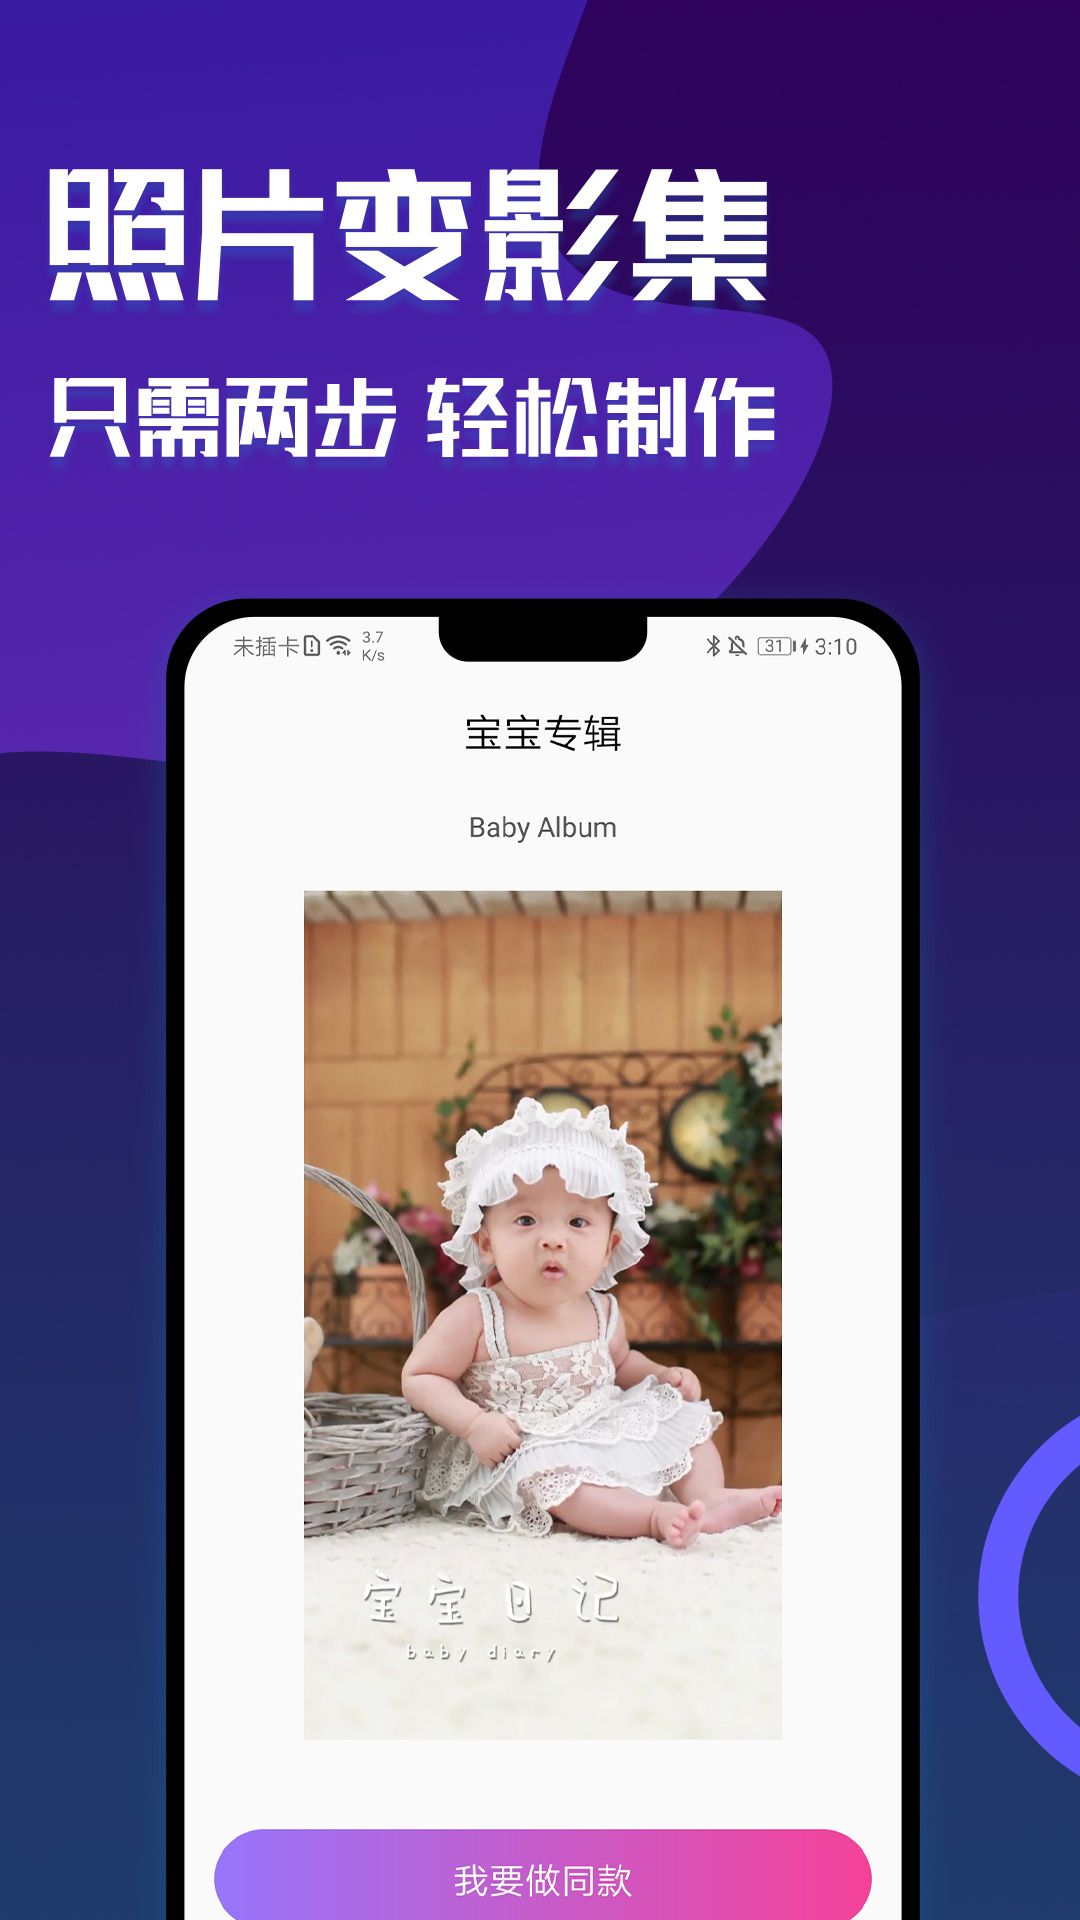 魔图秀秀appv5.3.8